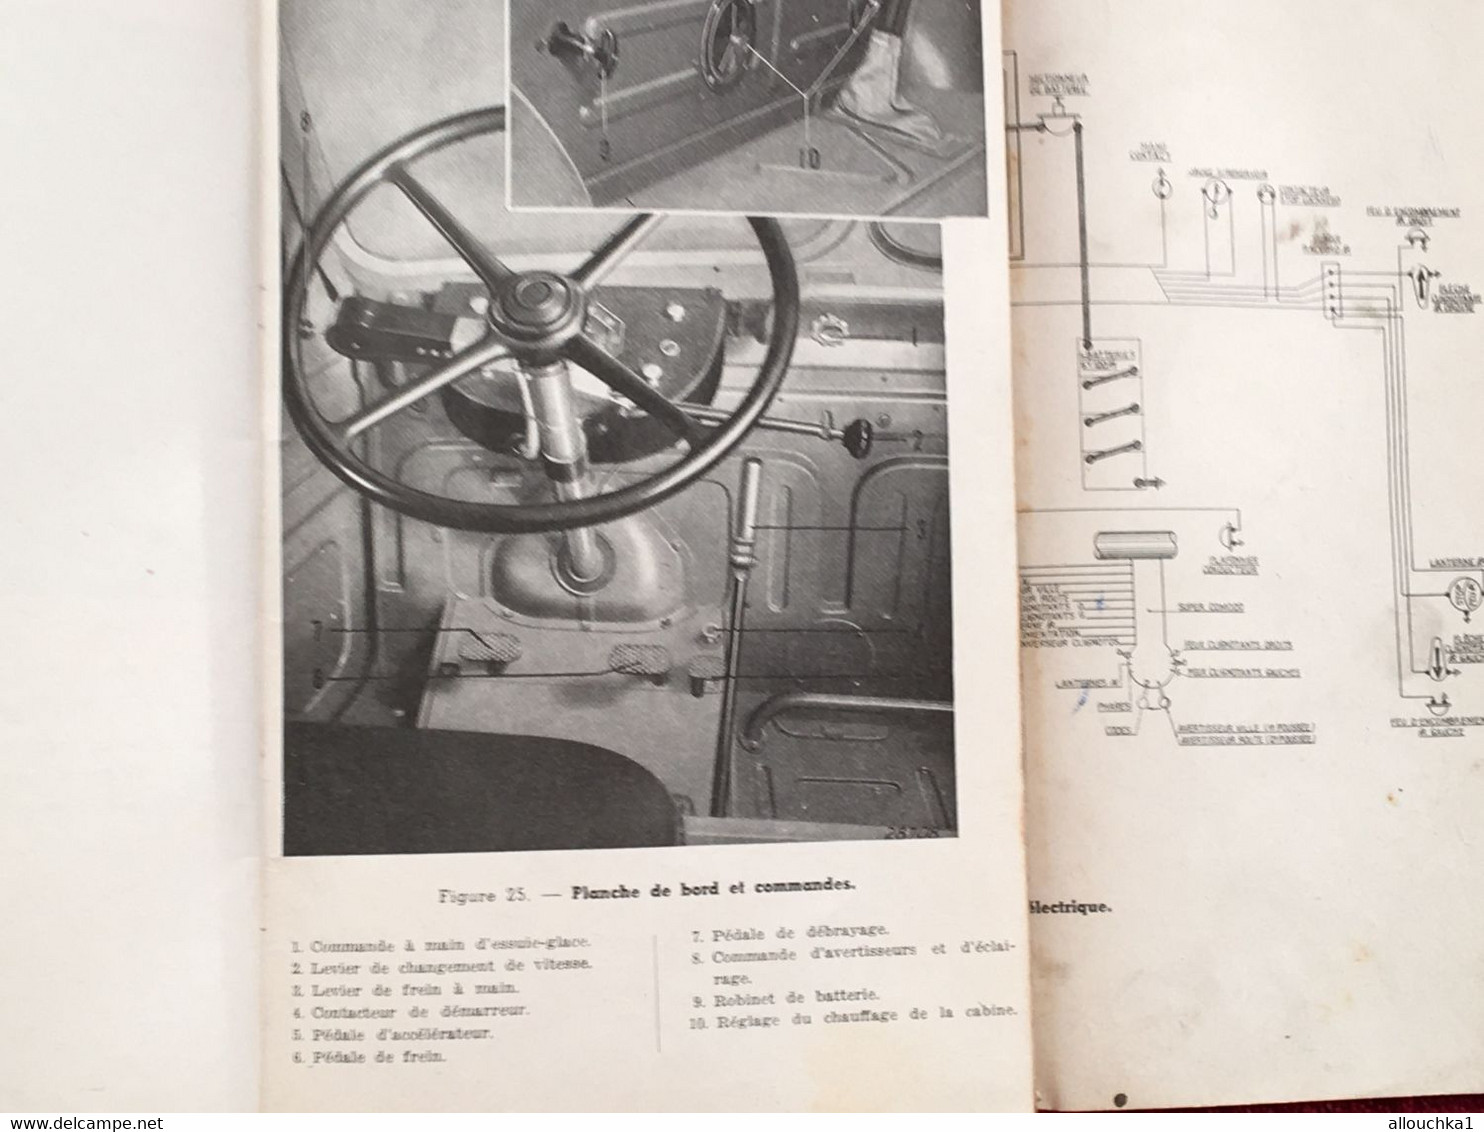 1950- Notice entretien Camion Renault 5 tonnes✔️Type R-42220-Moteur Huile lourde-6 C-105X120-regie nati usines Renault